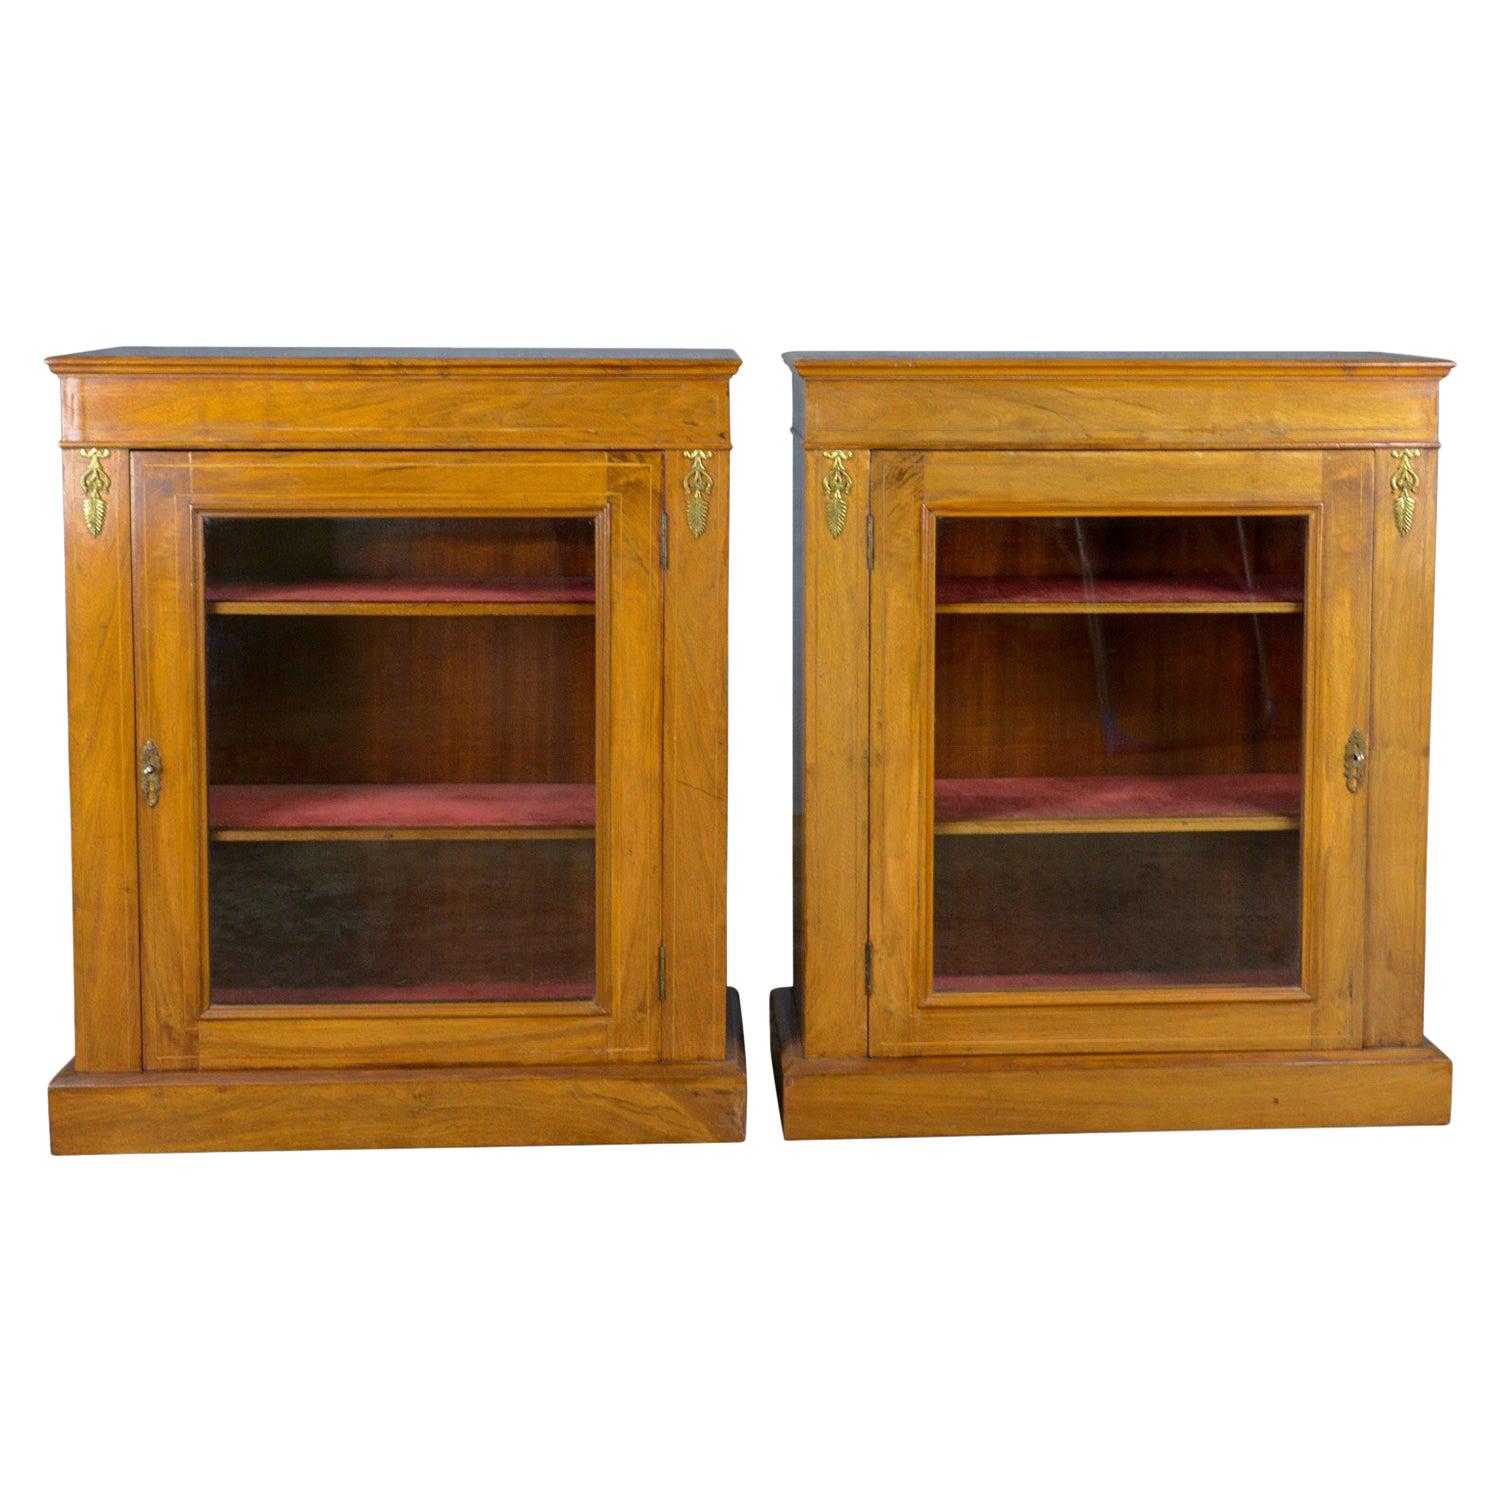 Pair of Antique Pier Cabinets, English, Walnut, Edwardian, Regency Revival